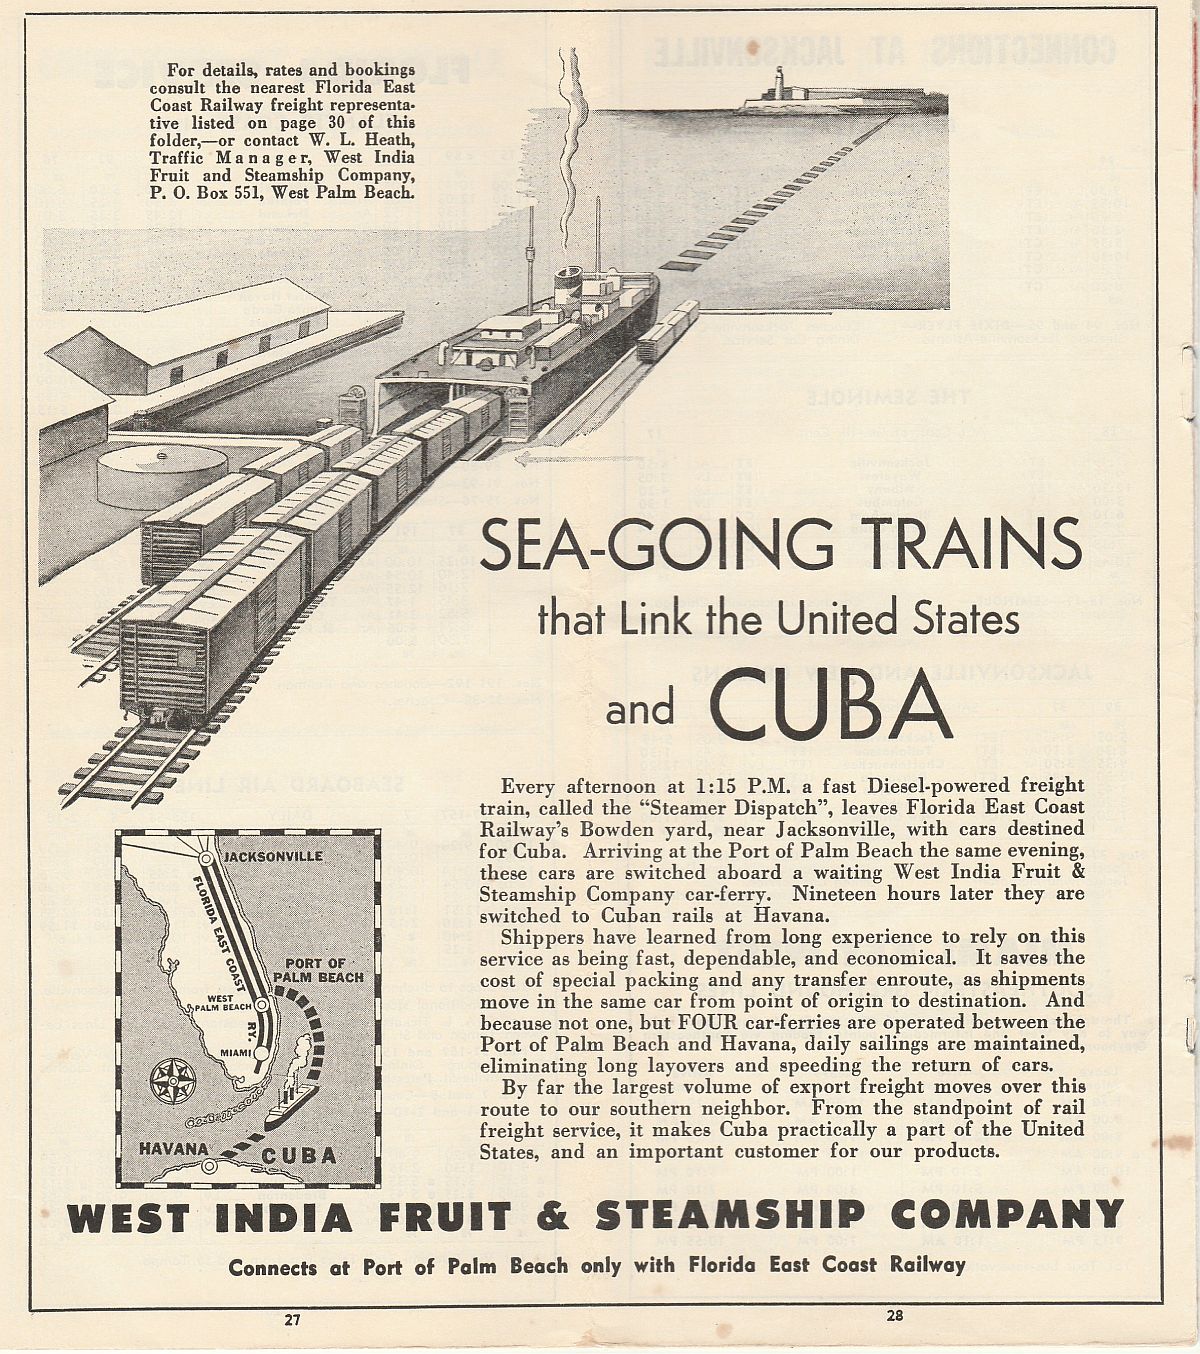 Florida East Coast Railway Dec. 12, 1957 timetable Pg. 27-28: West India Fruit & Steamship Company F.E.C. railroad ferry from Port of Palm Beach to Havana, Cuba